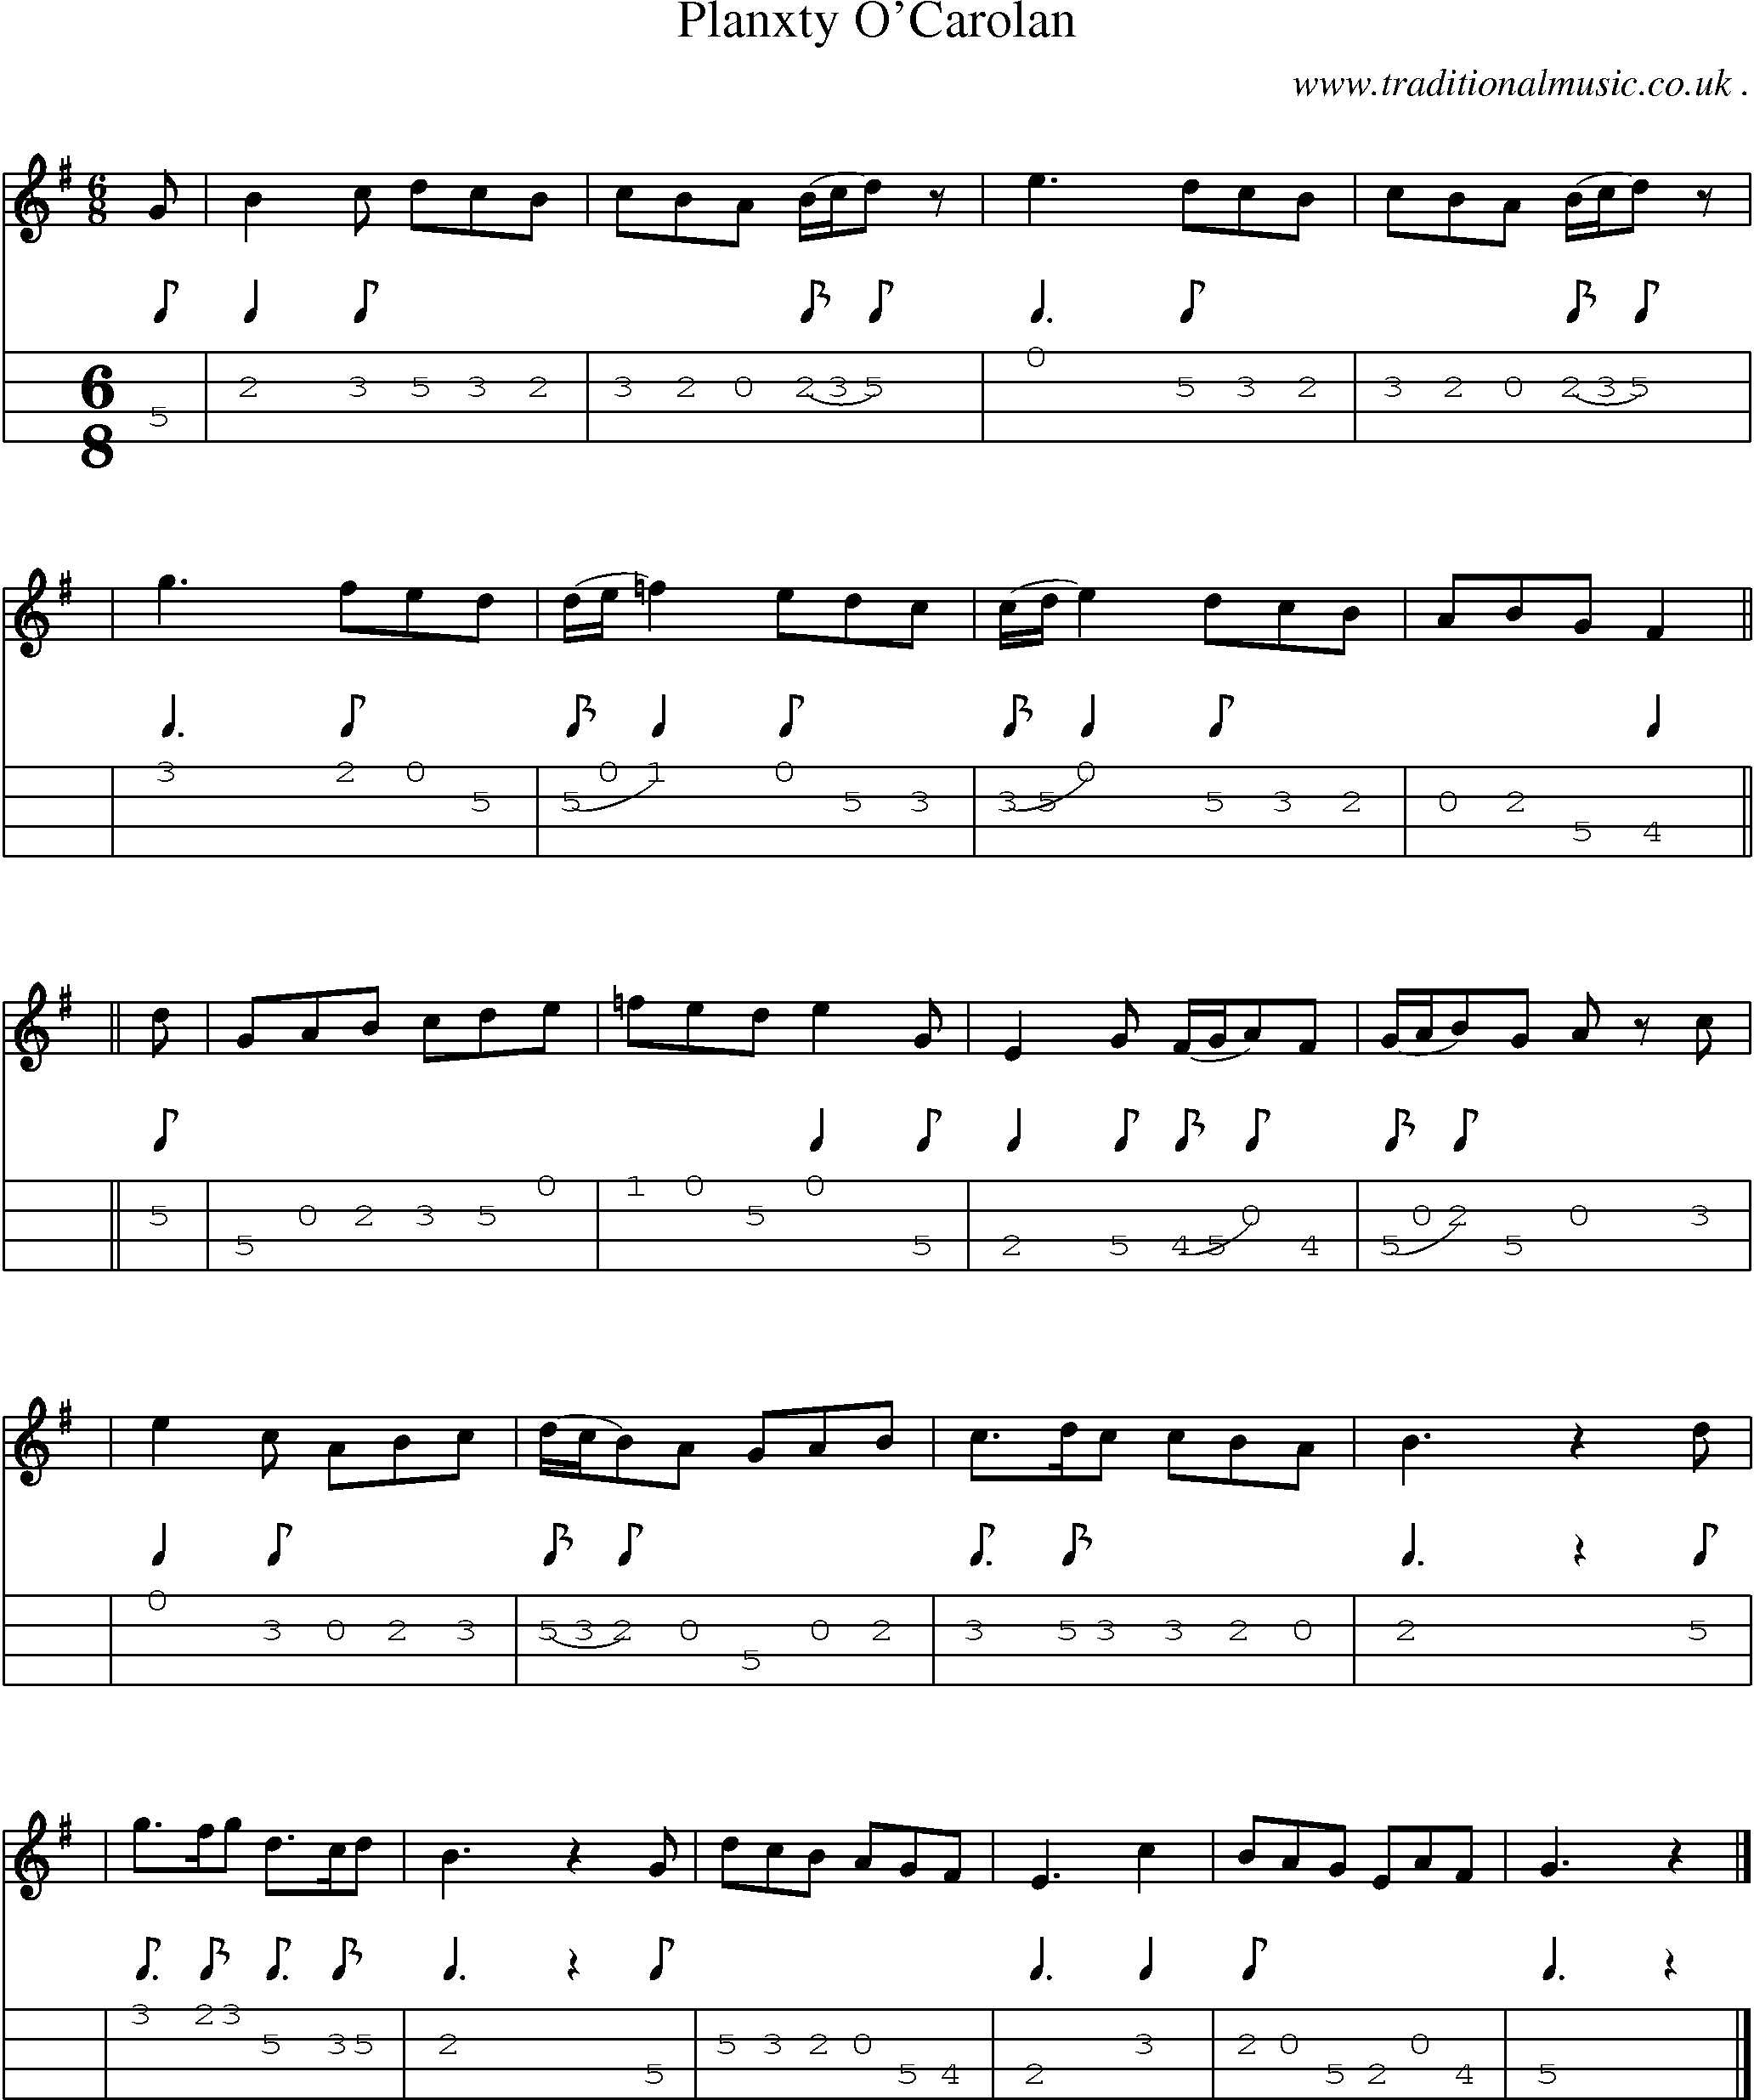 Sheet-music  score, Chords and Mandolin Tabs for Planxty Ocarolan